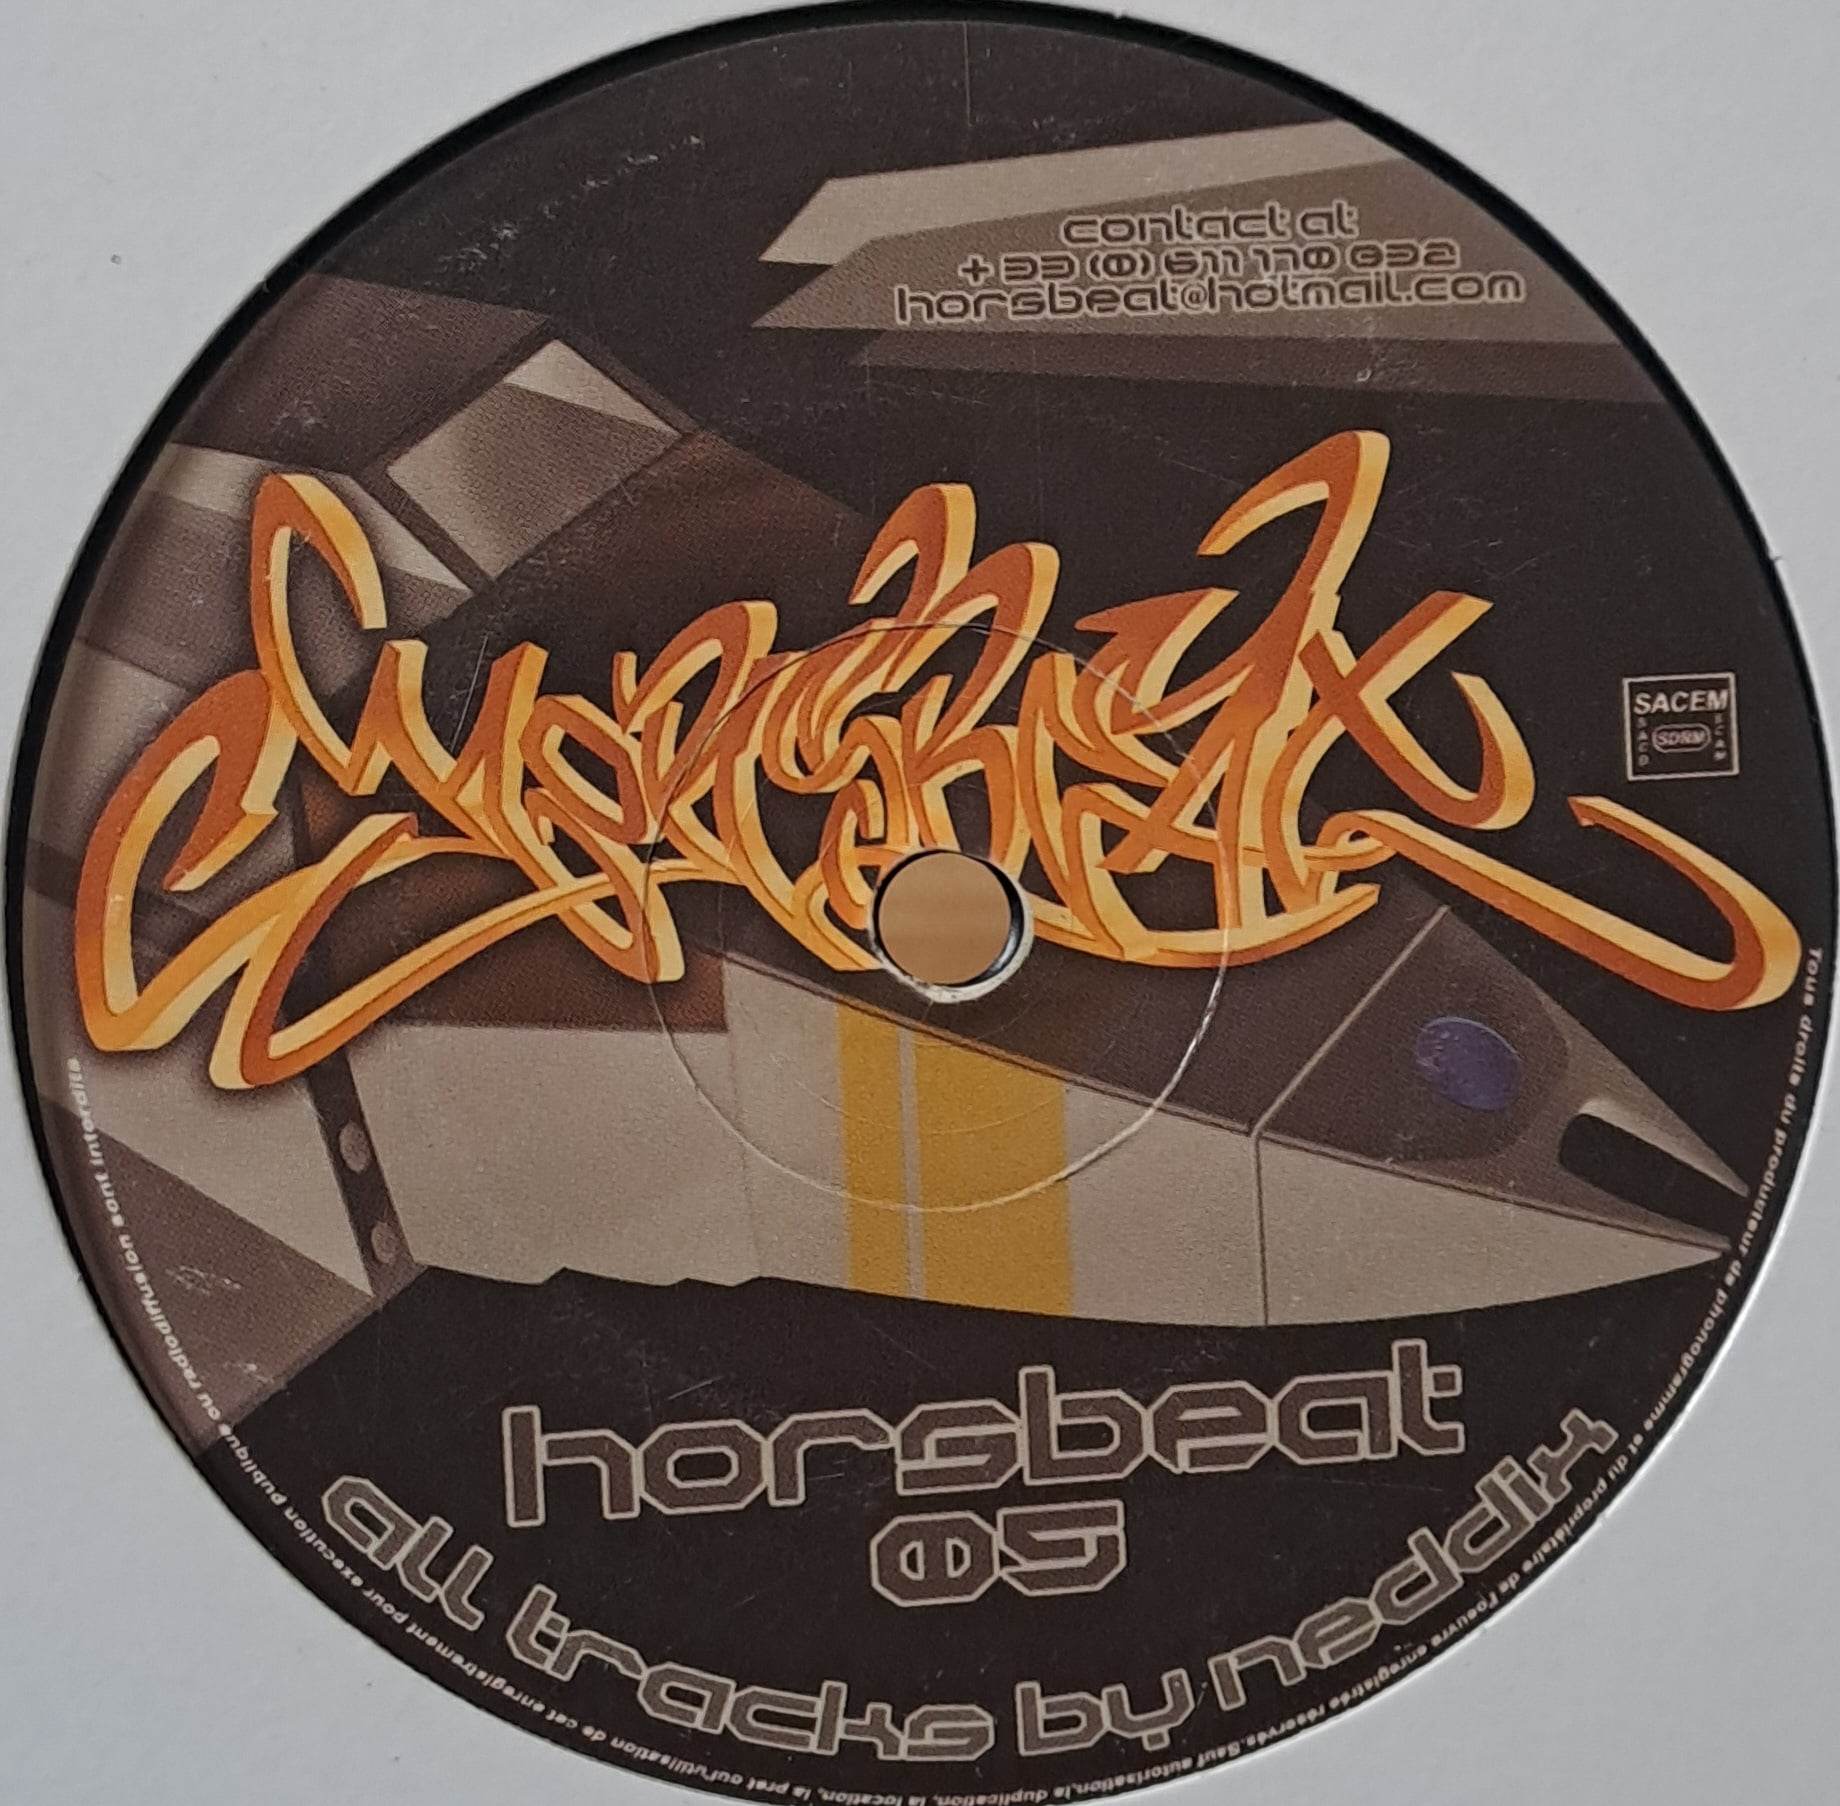 Hors Beat 05 - vinyle freetekno